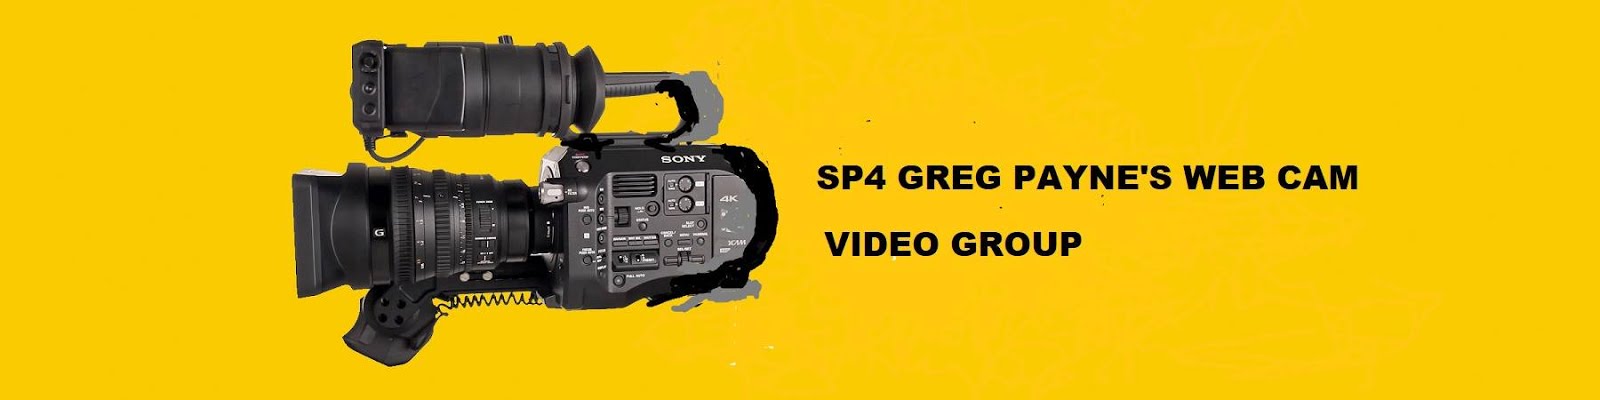 SP4 GREG PAYNE'S WEB CAM VIDEO GROUP